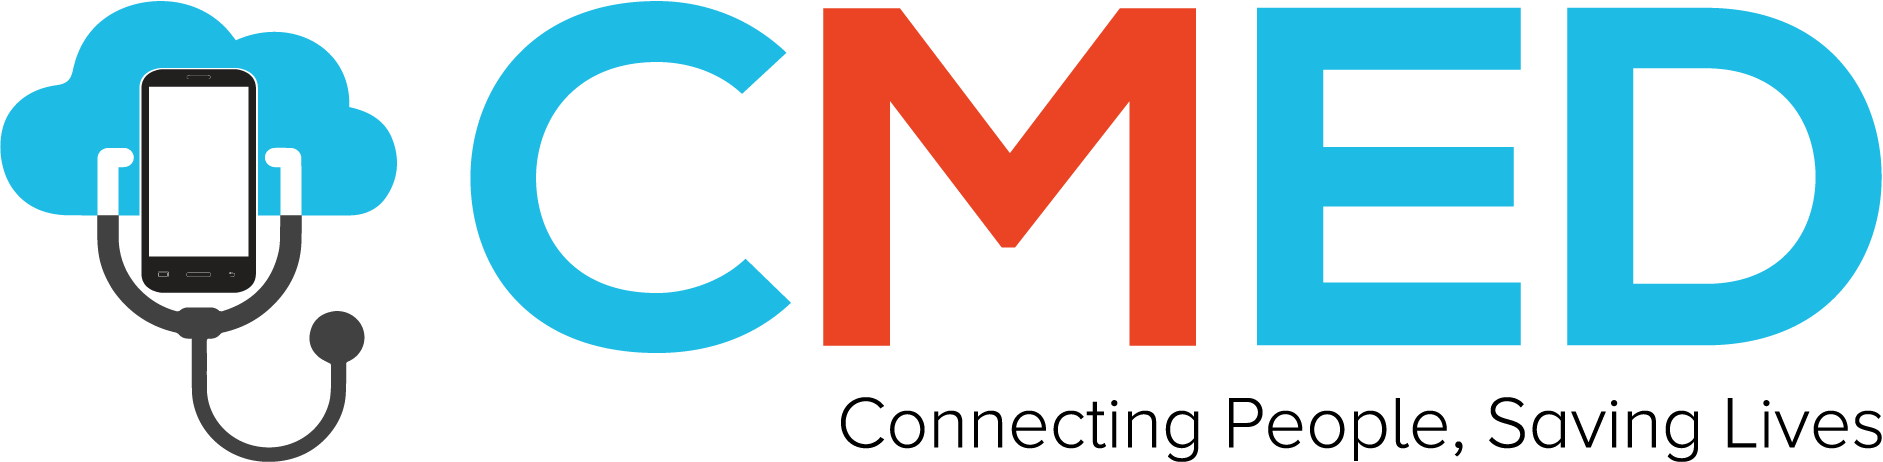 CMED Health Ltd.